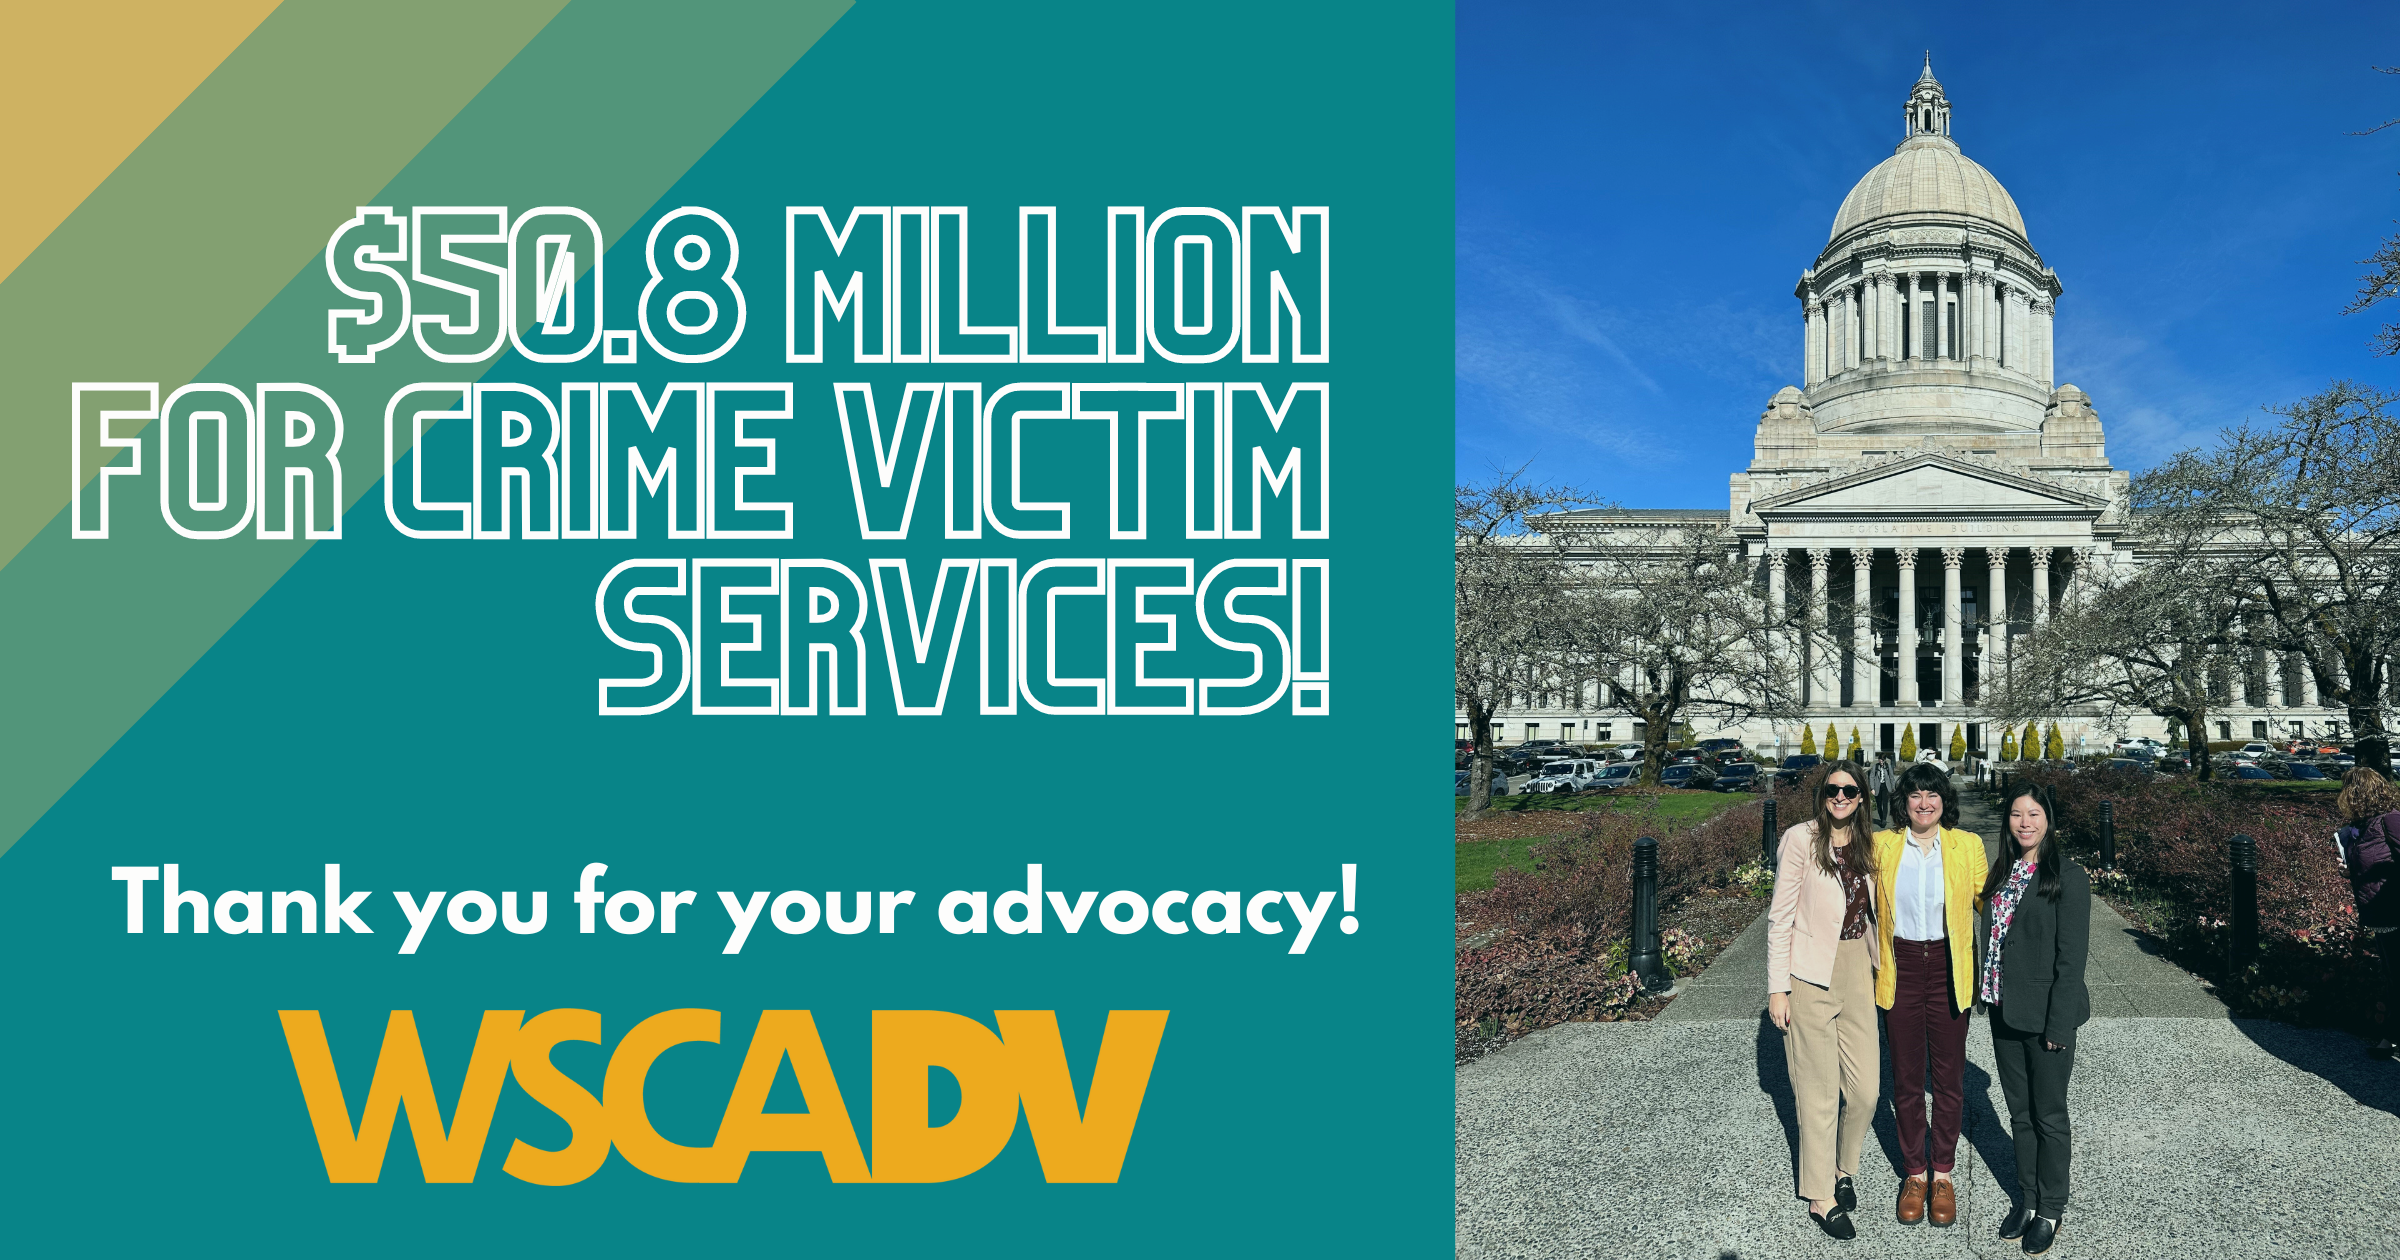 $50.8 Million for Crime Victims Services!